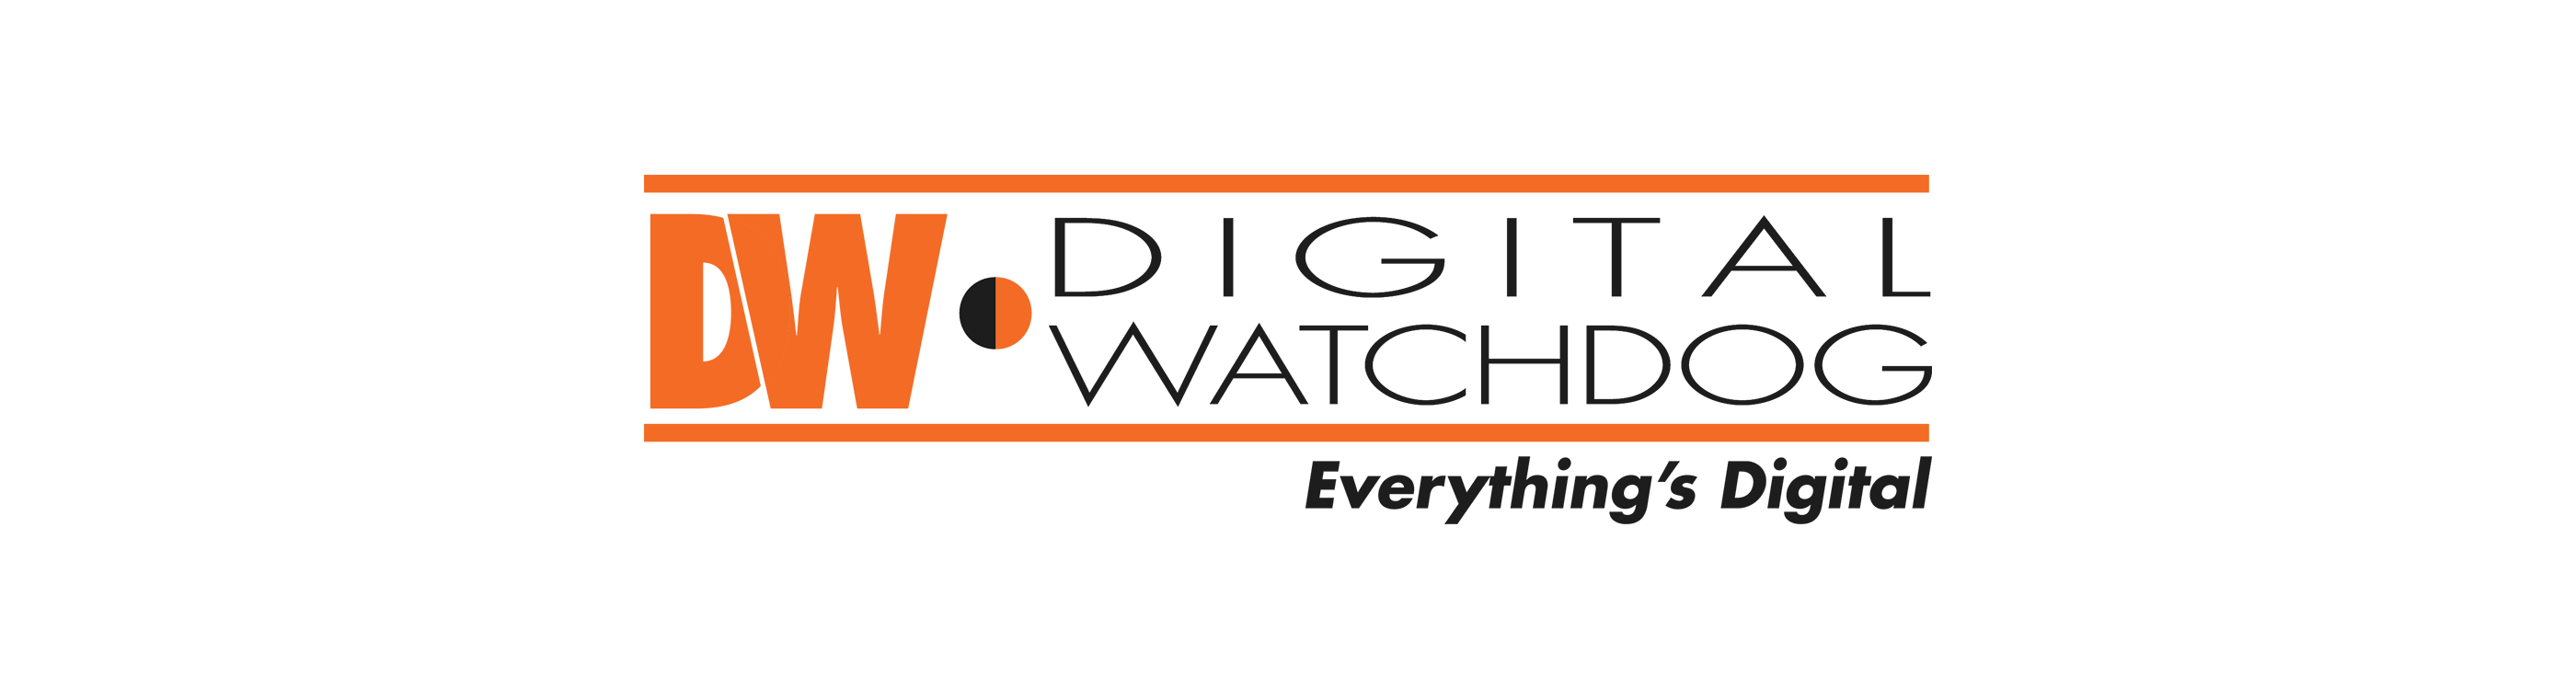 Digital Watchdog Logo